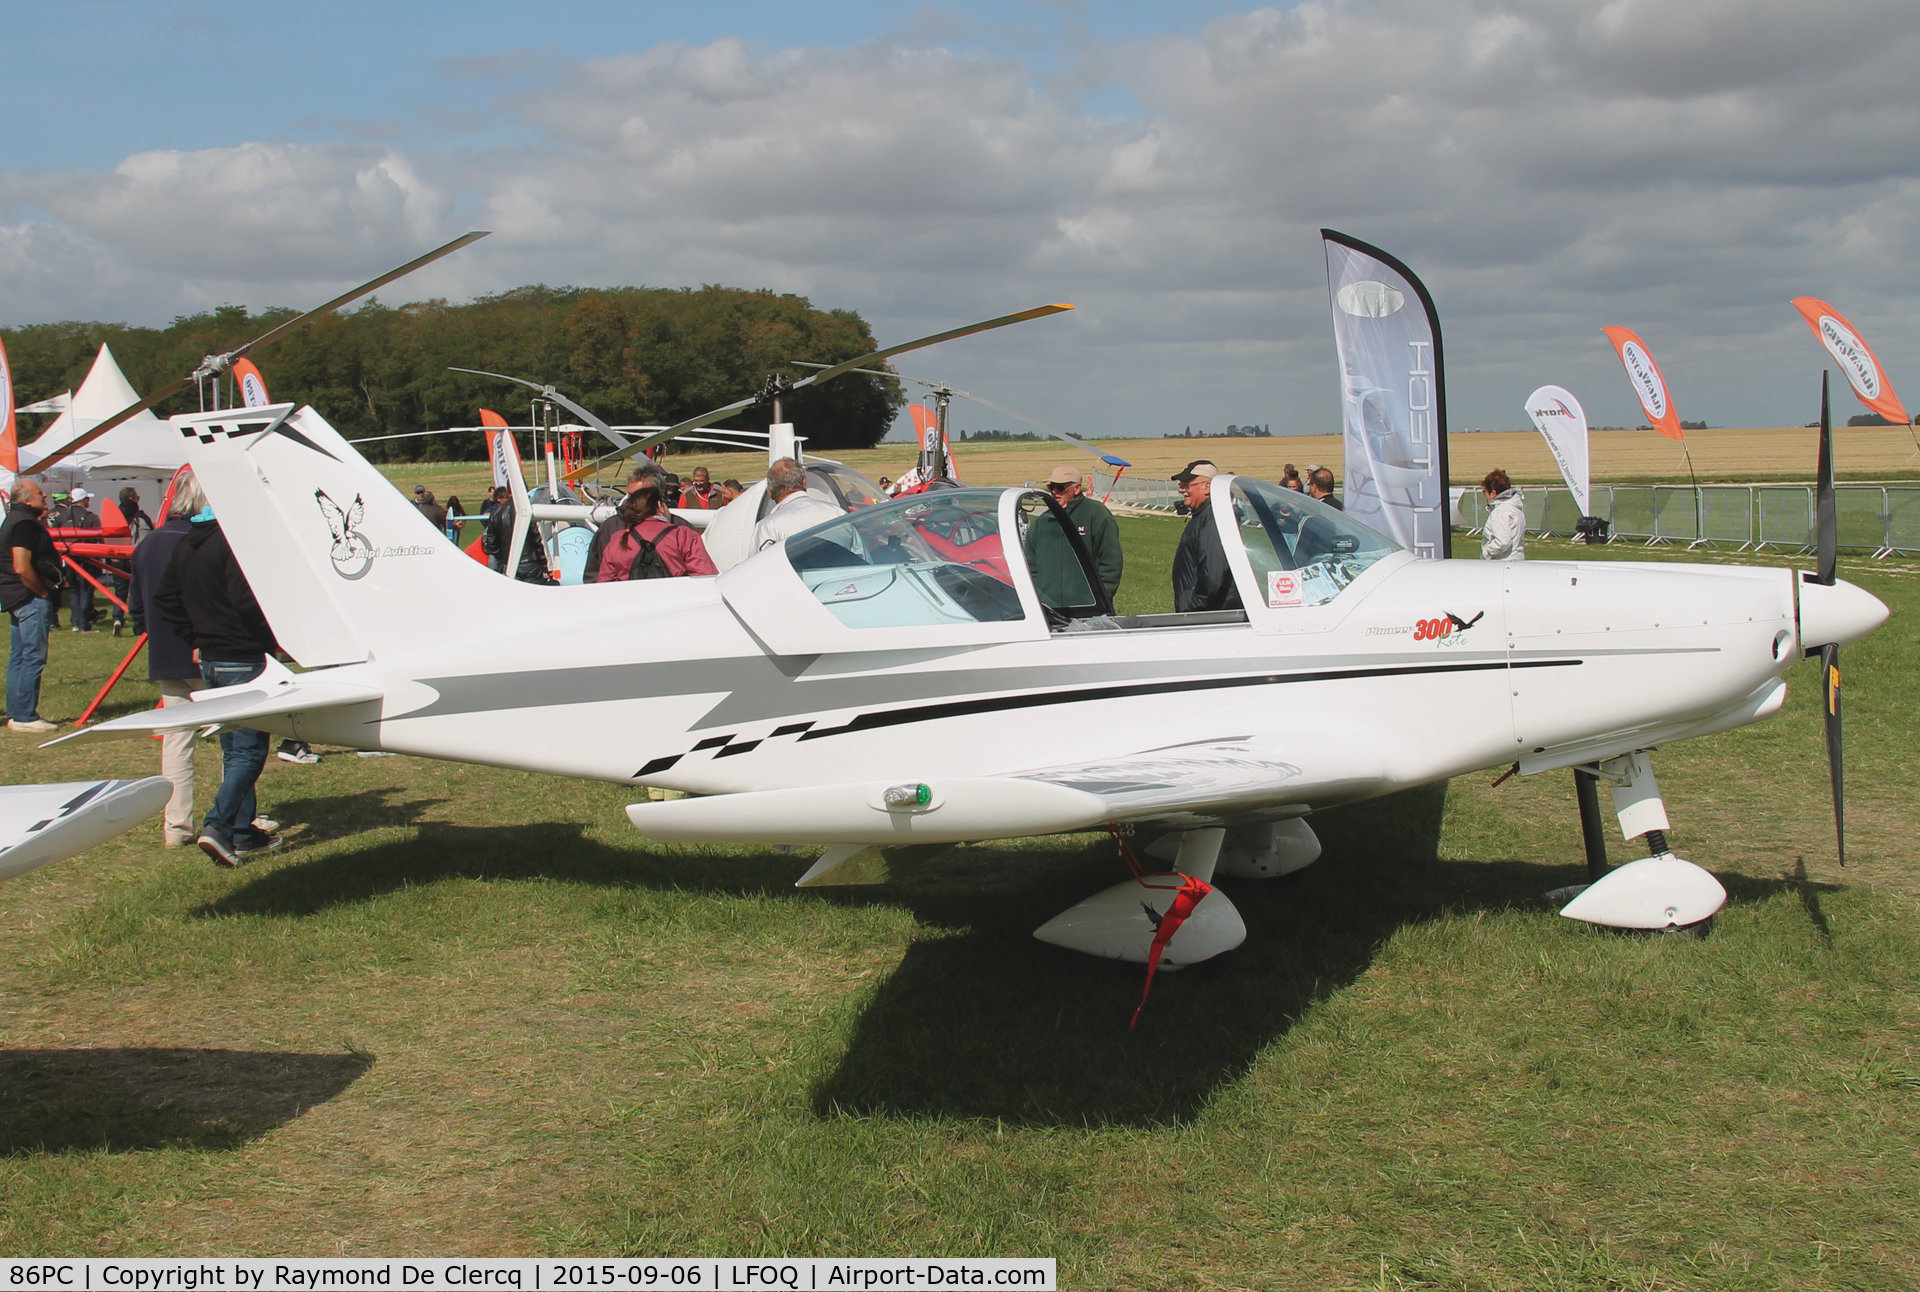 86PC, 2015 Alpi Aviation Pioneer 300 Kite C/N Not Found  86PC, ULM salon Blois.